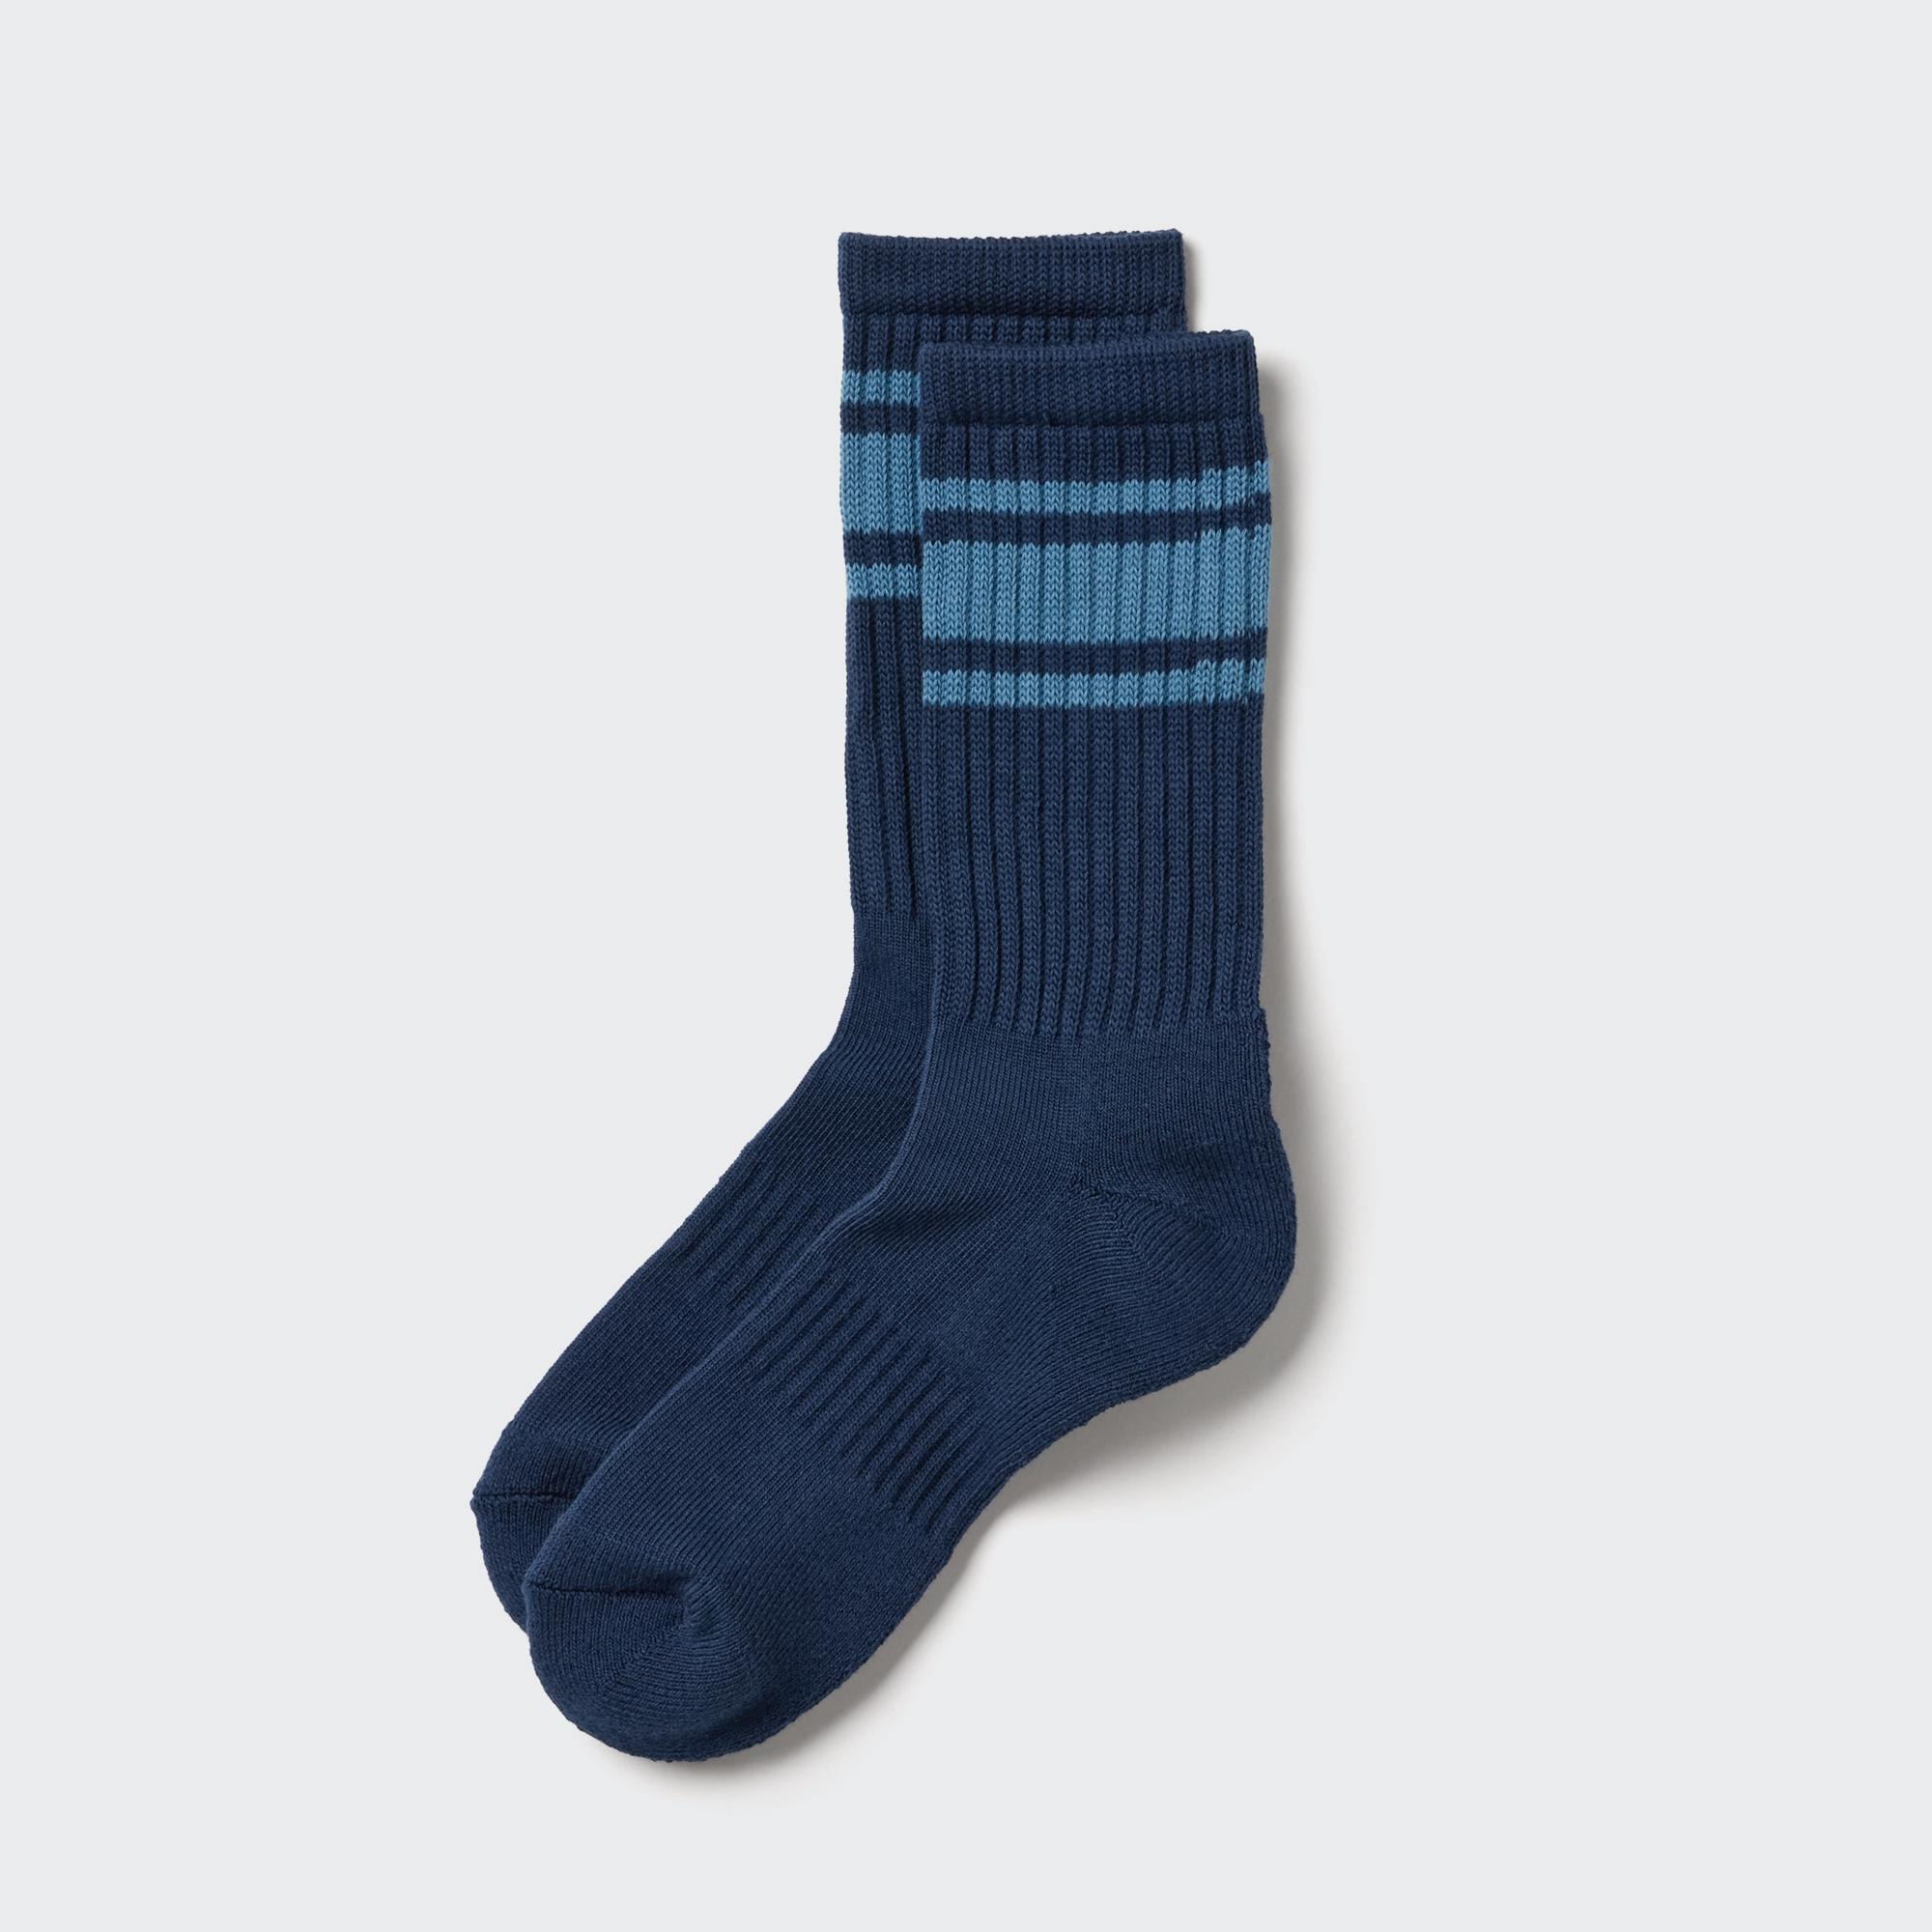 Pile Lined Socks